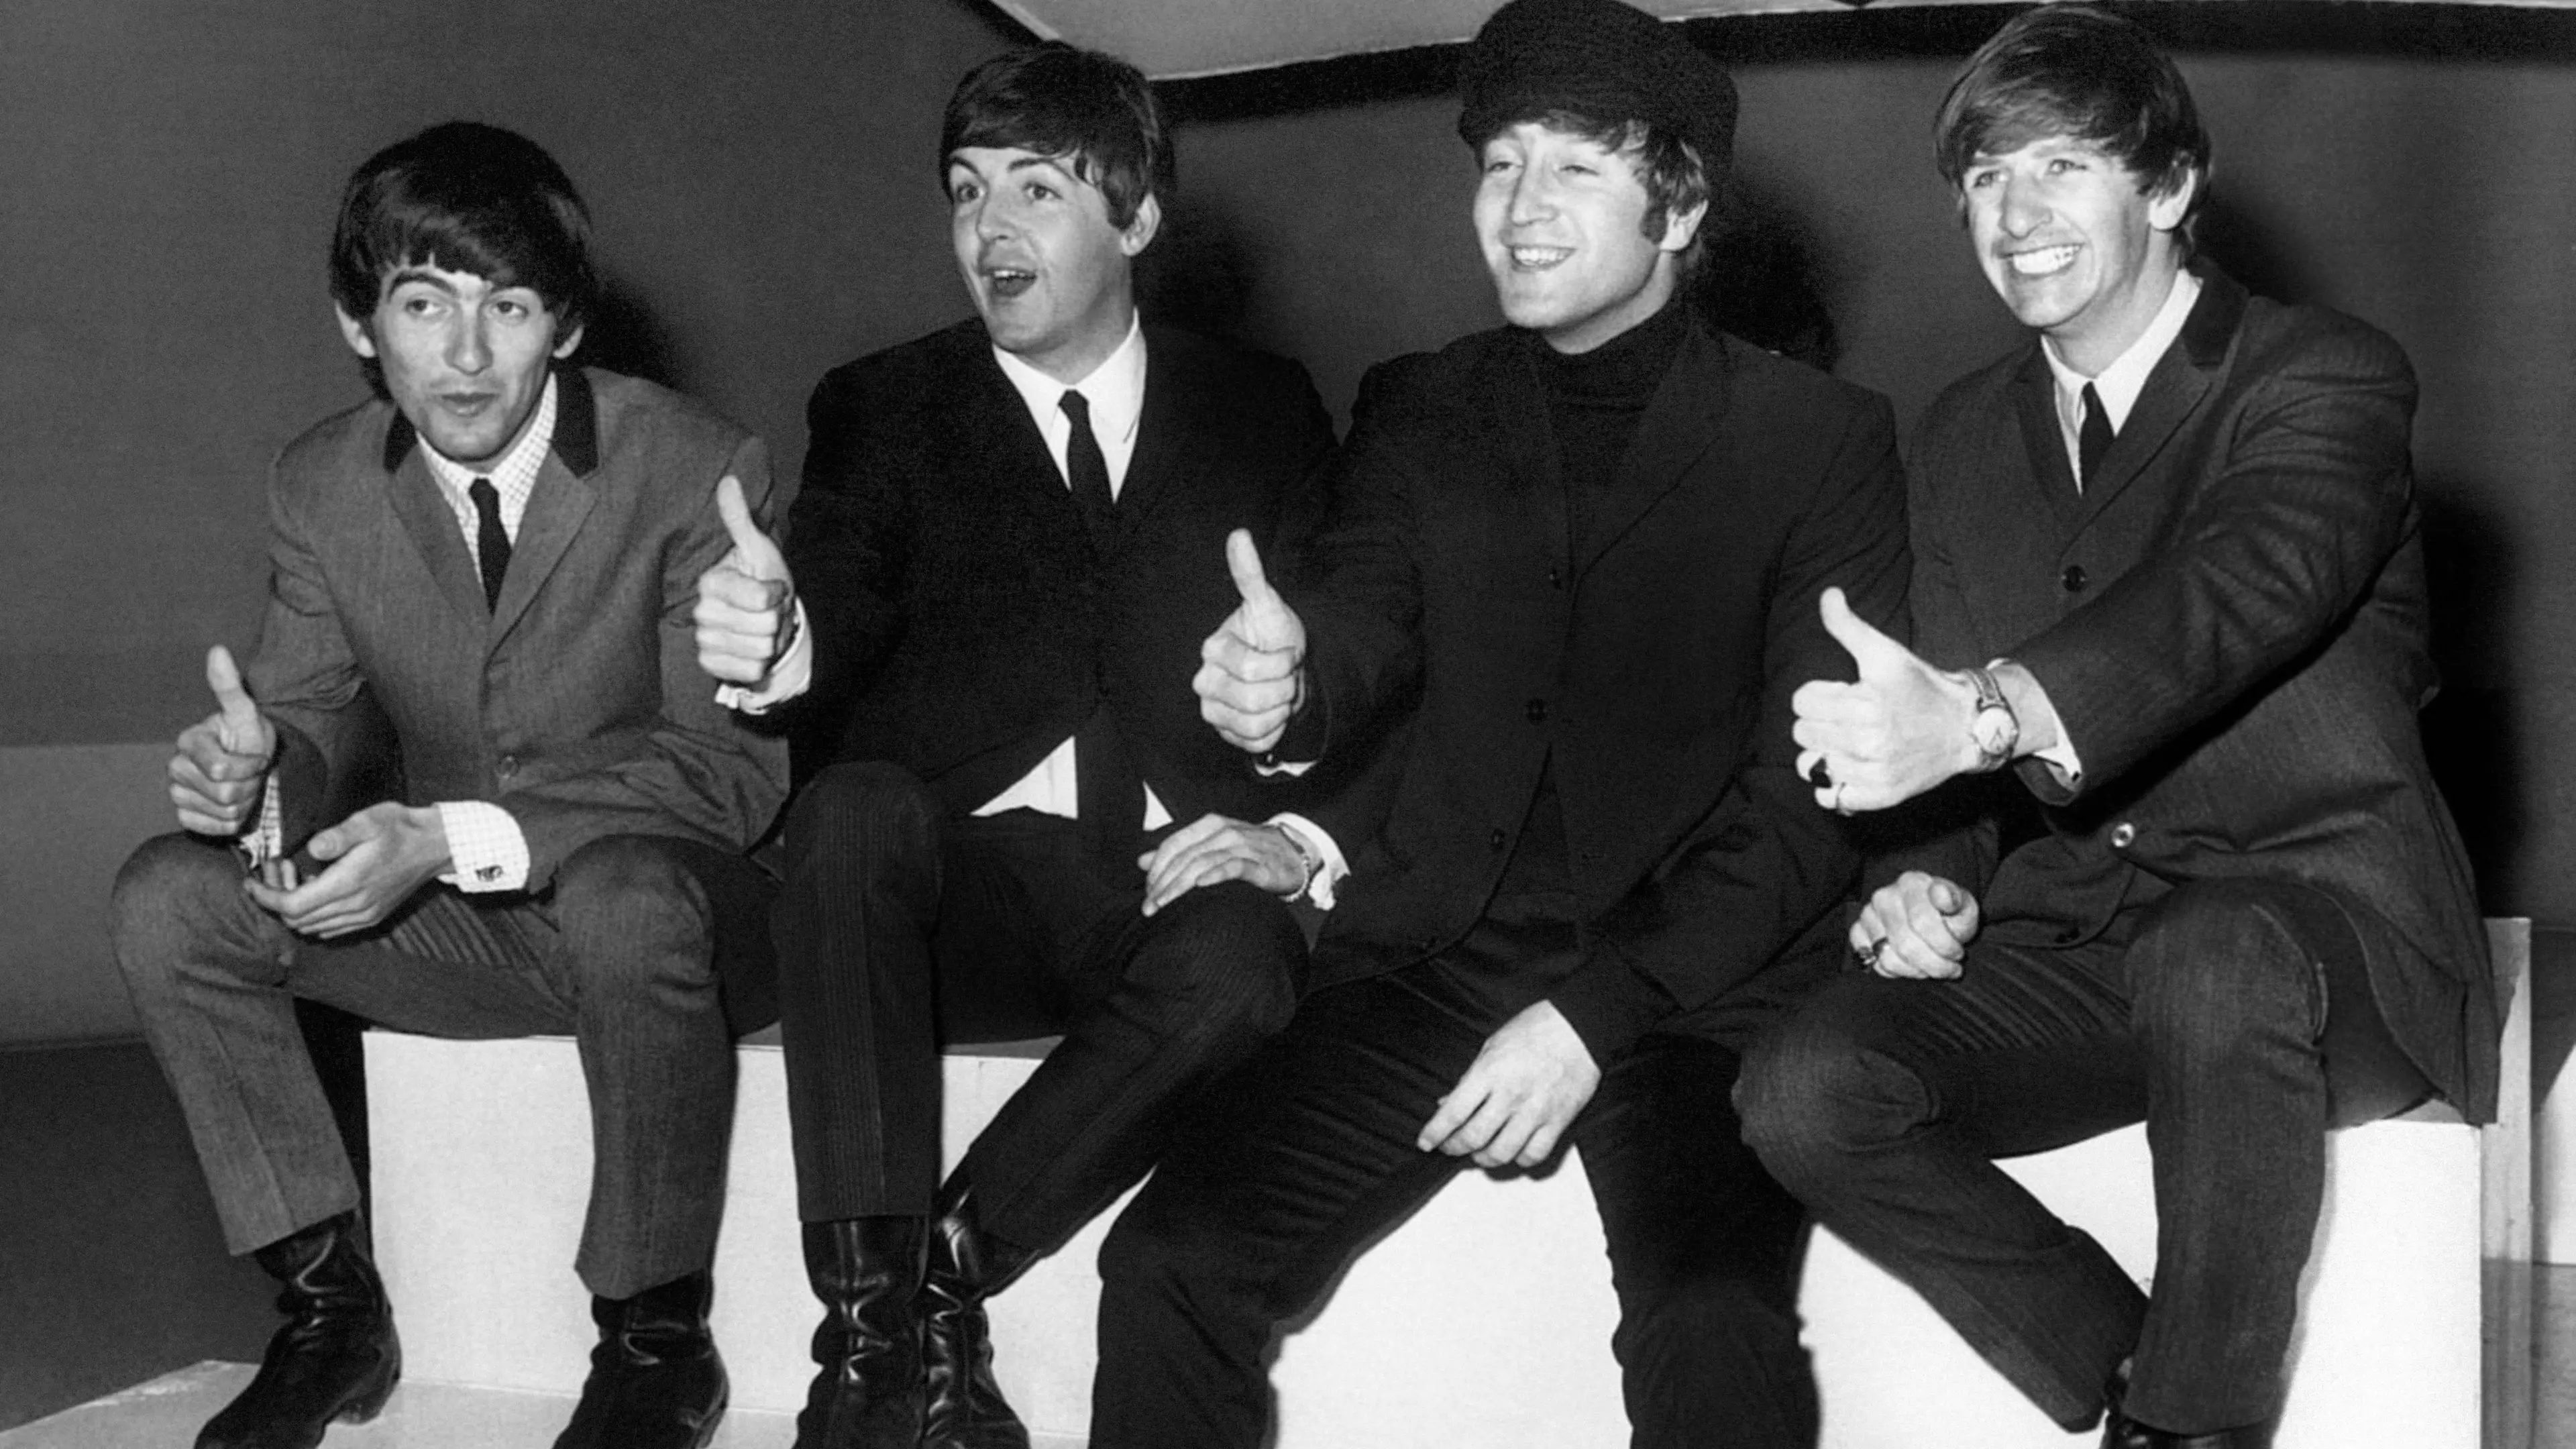 Sir Paul McCartney Reveals He Masturbated With John Lennon